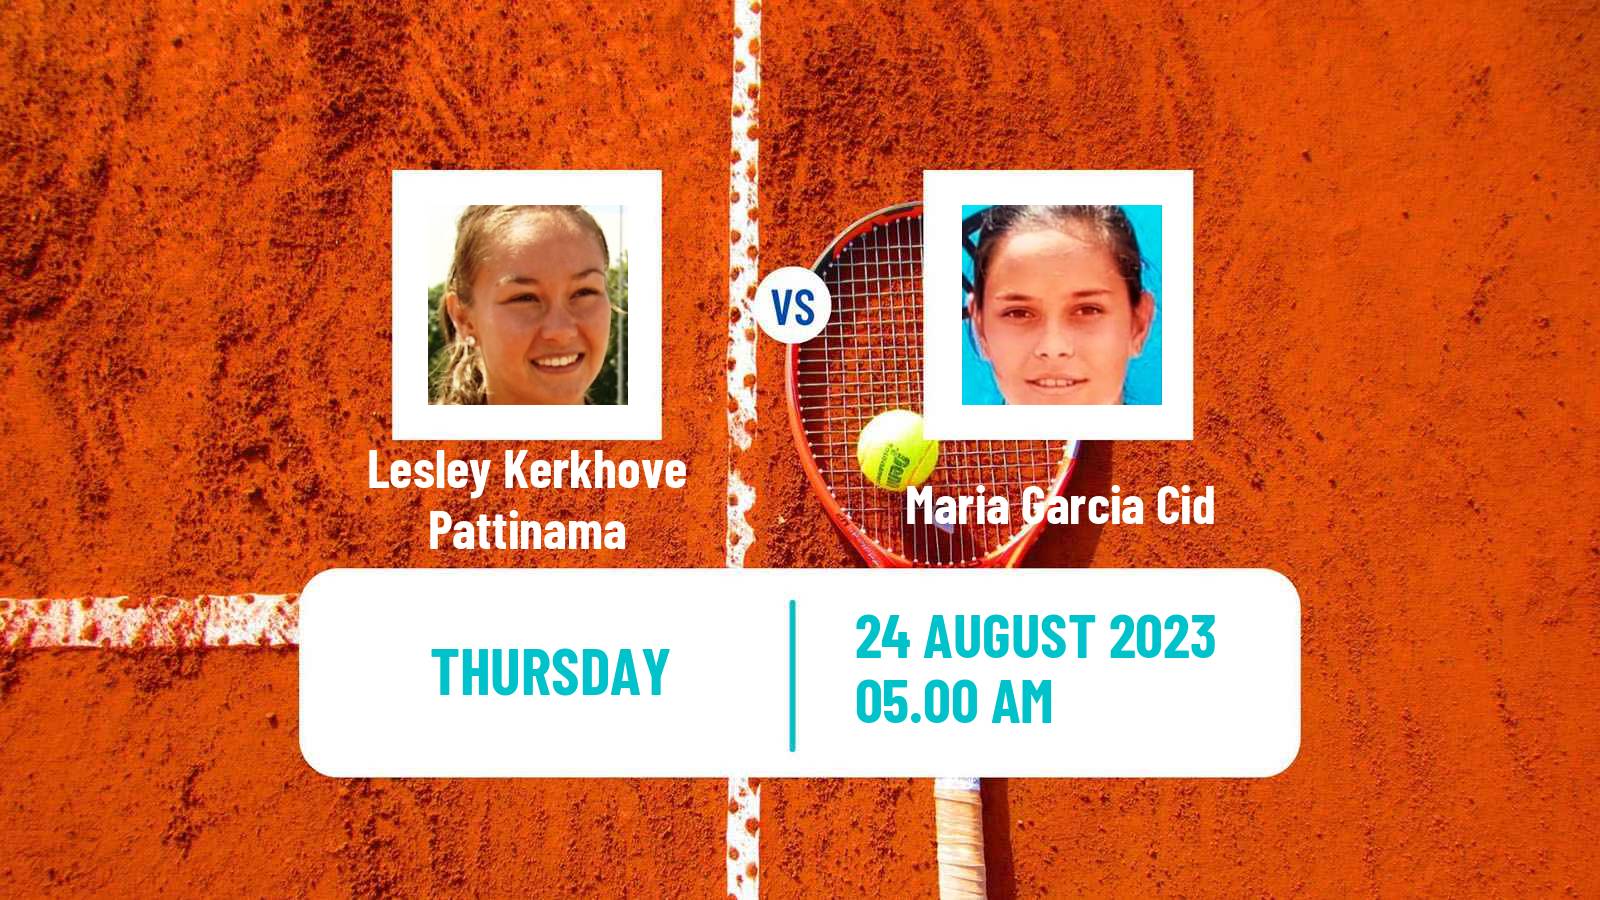 Tennis ITF W25 Vigo Women Lesley Kerkhove Pattinama - Maria Garcia Cid